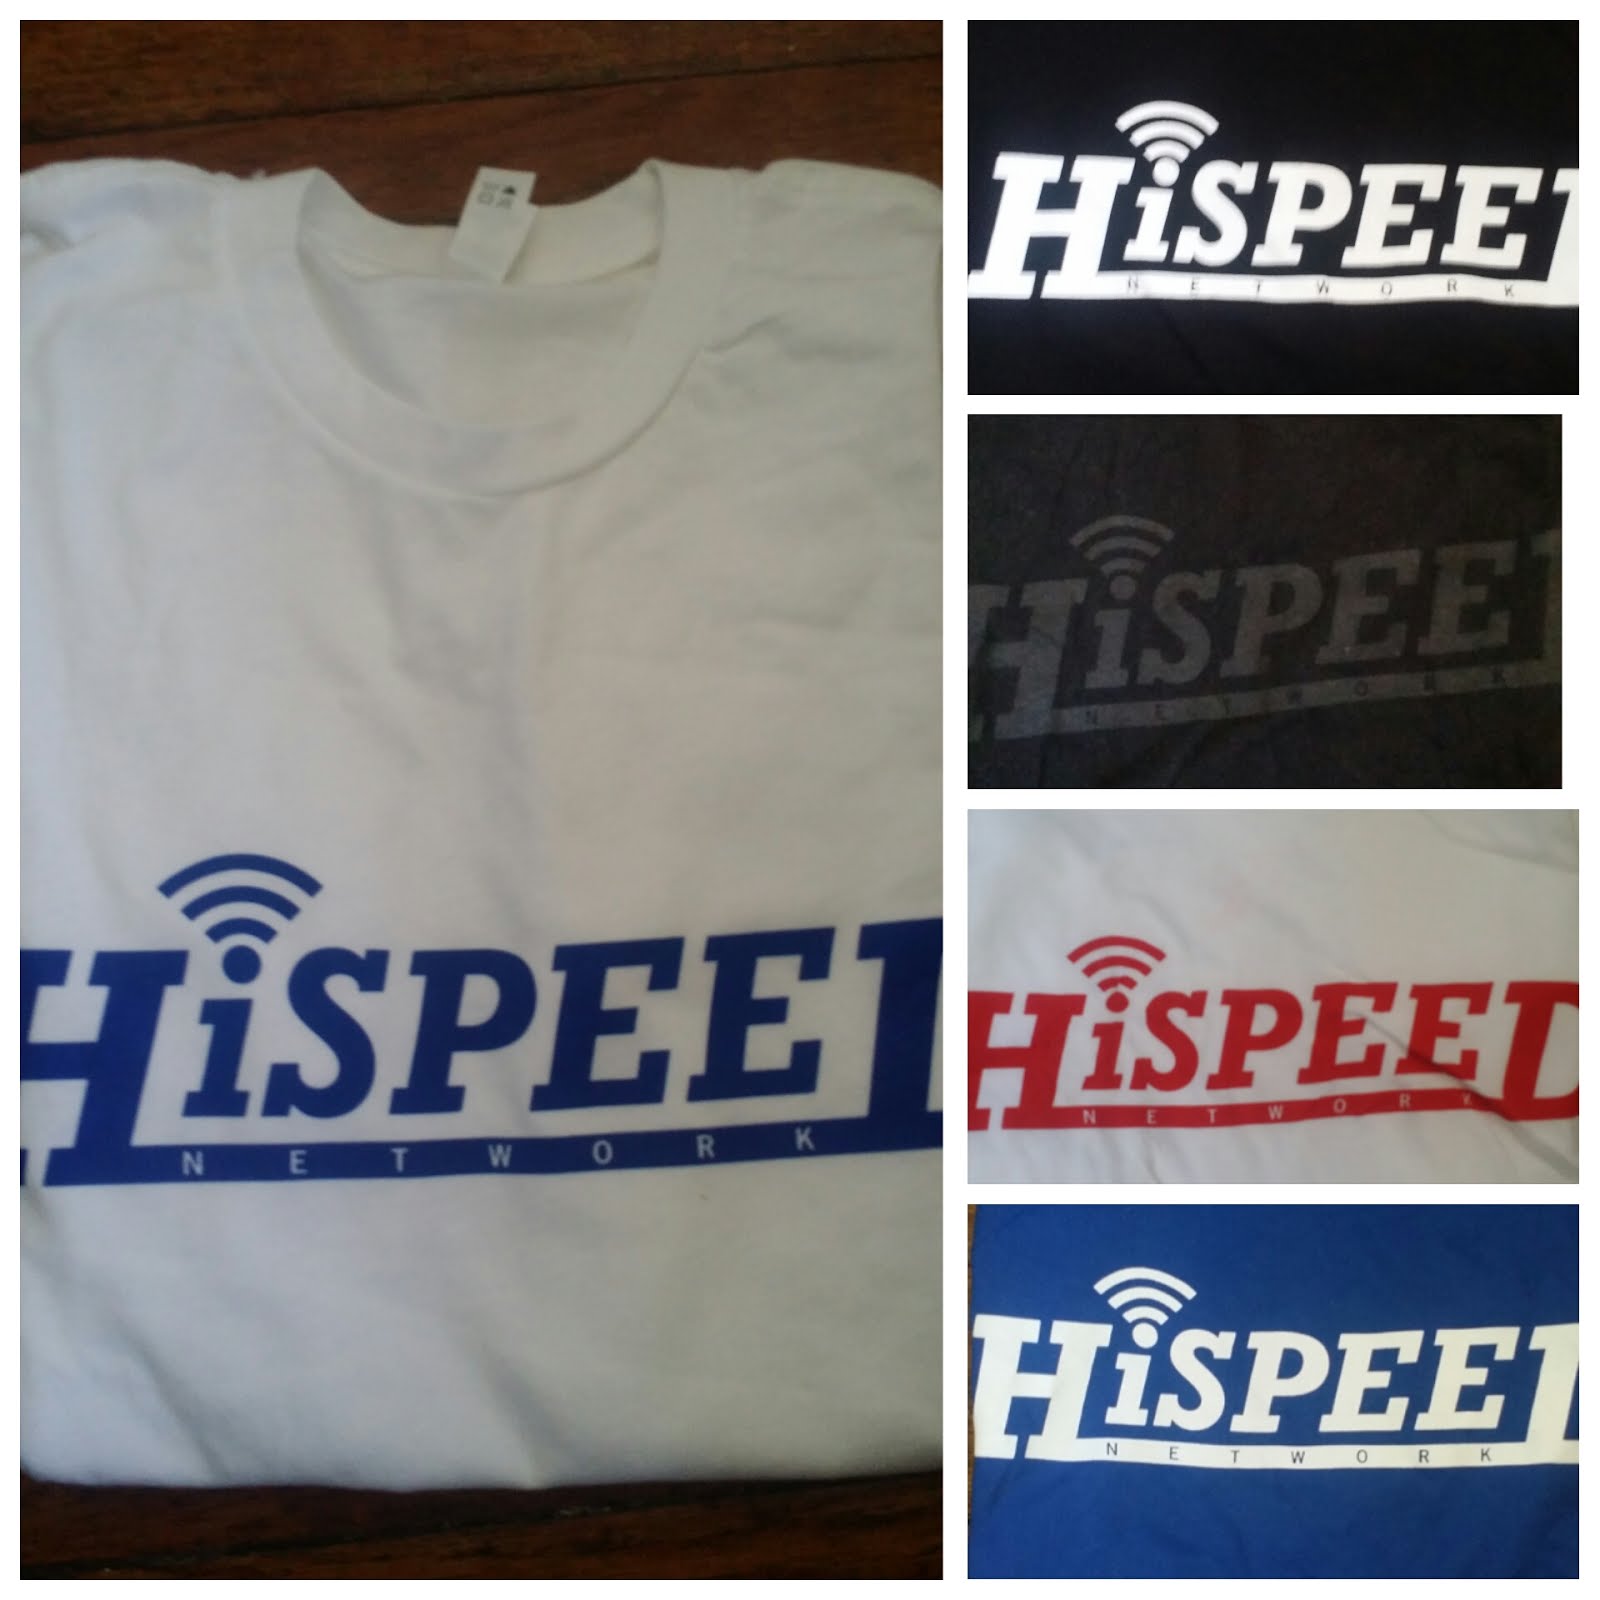 HiSpeed Network T-Shirts